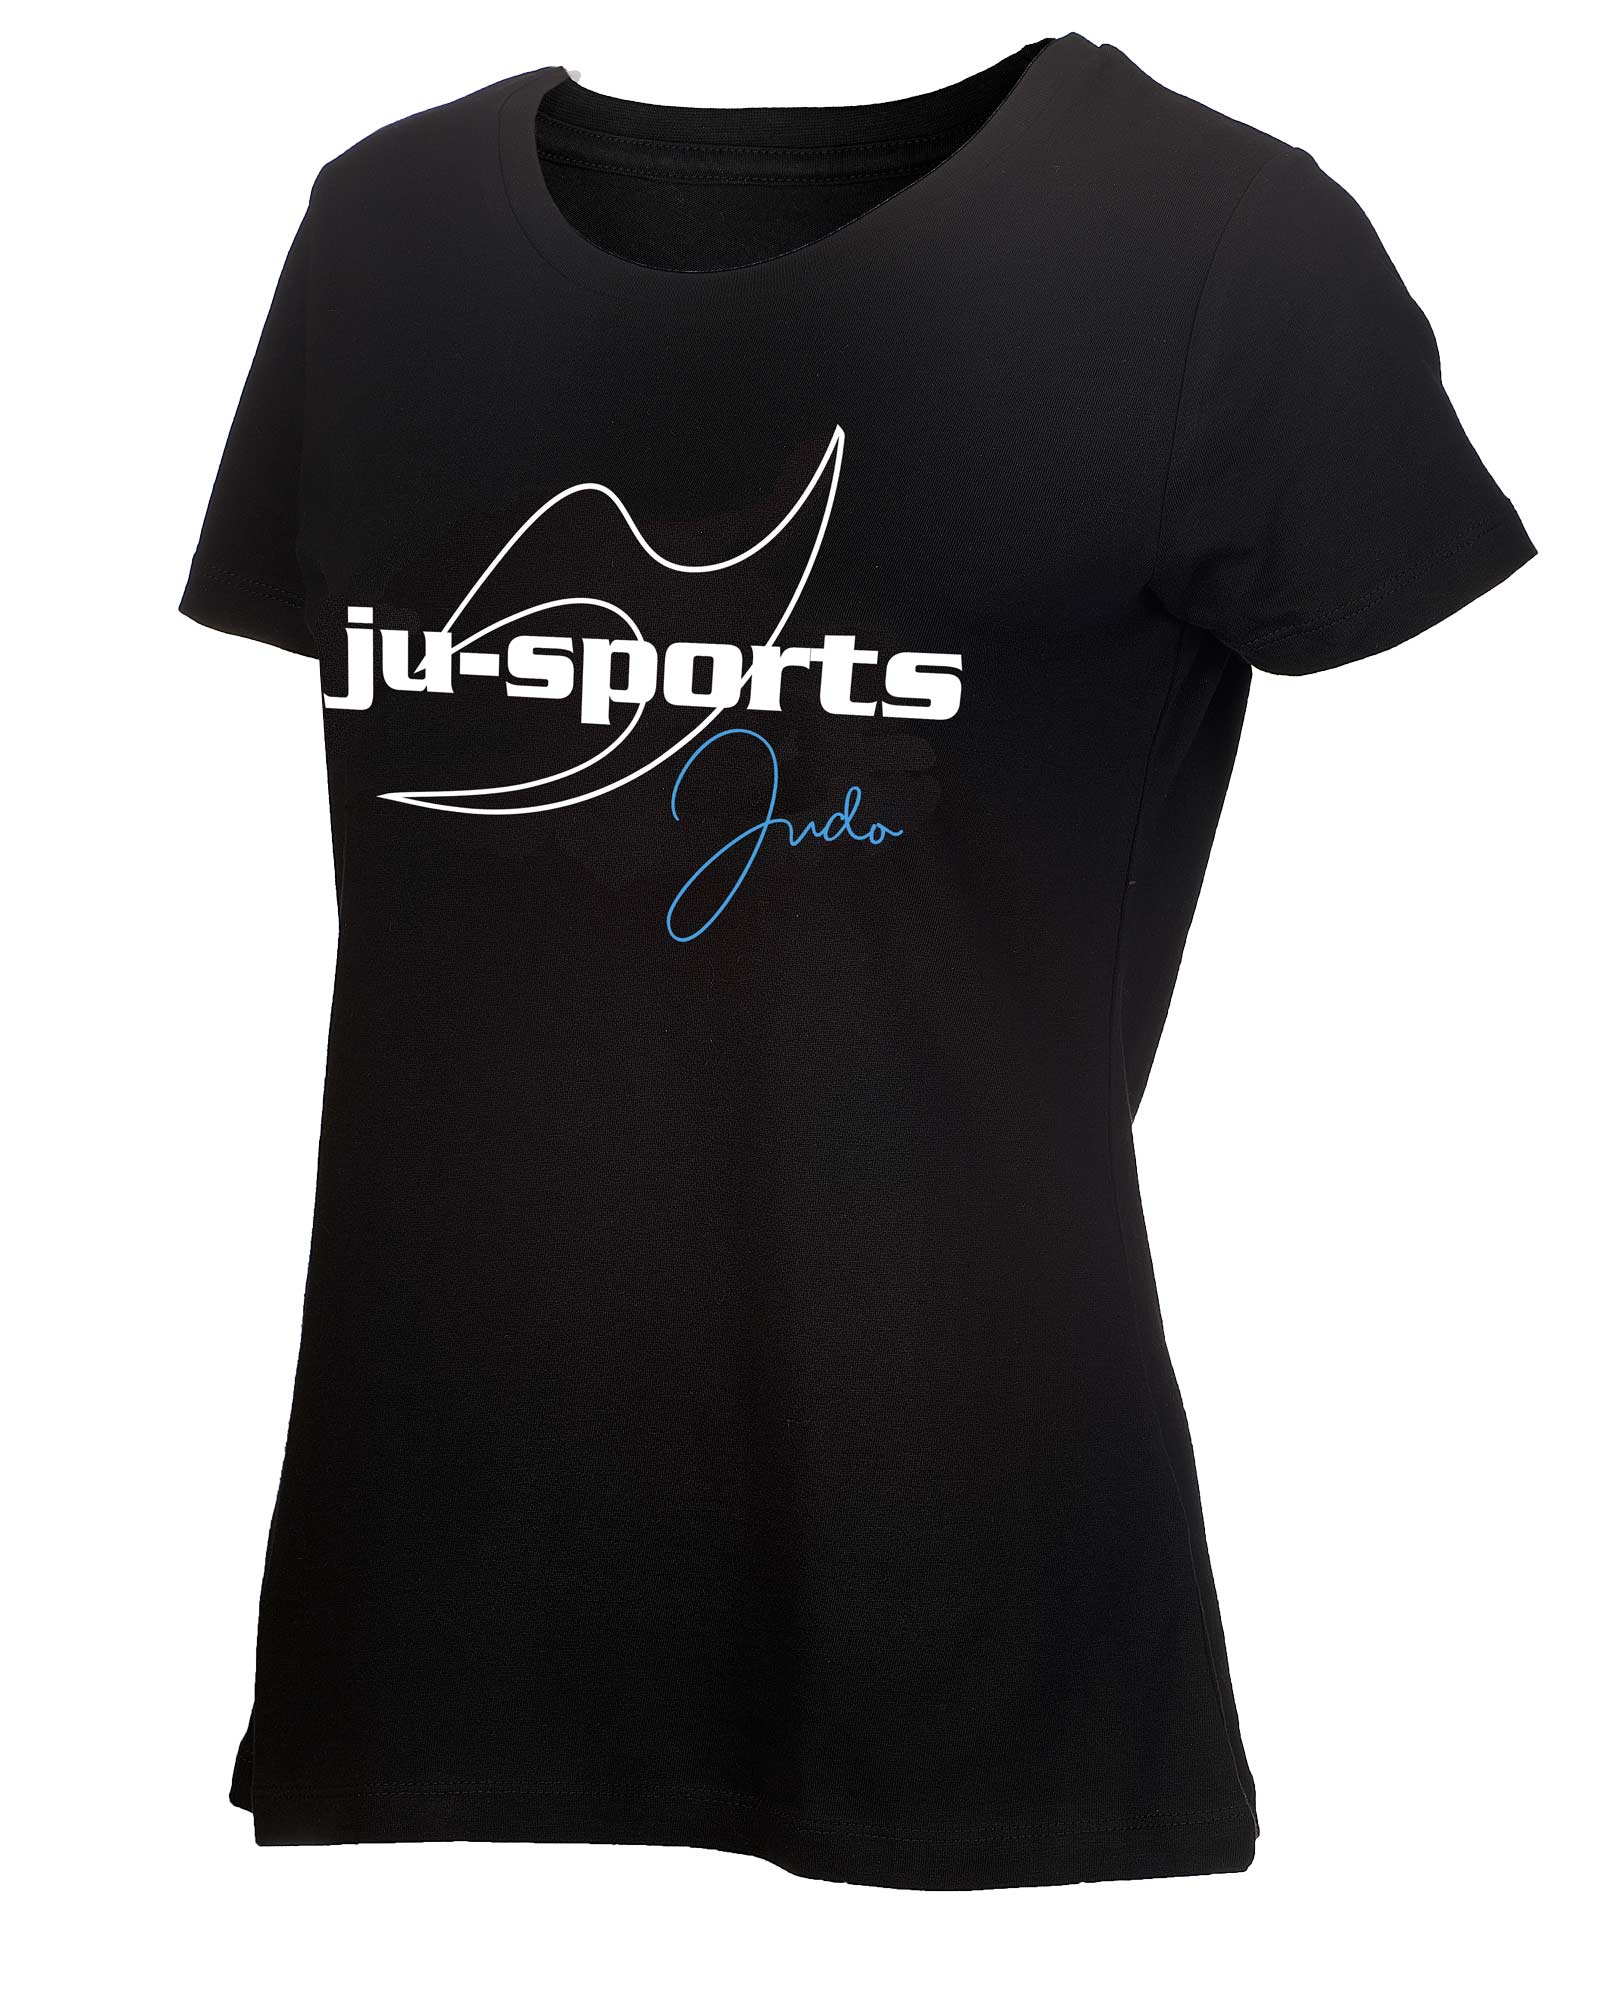 Ju-Sports Signature Line Shirt Judo Lady